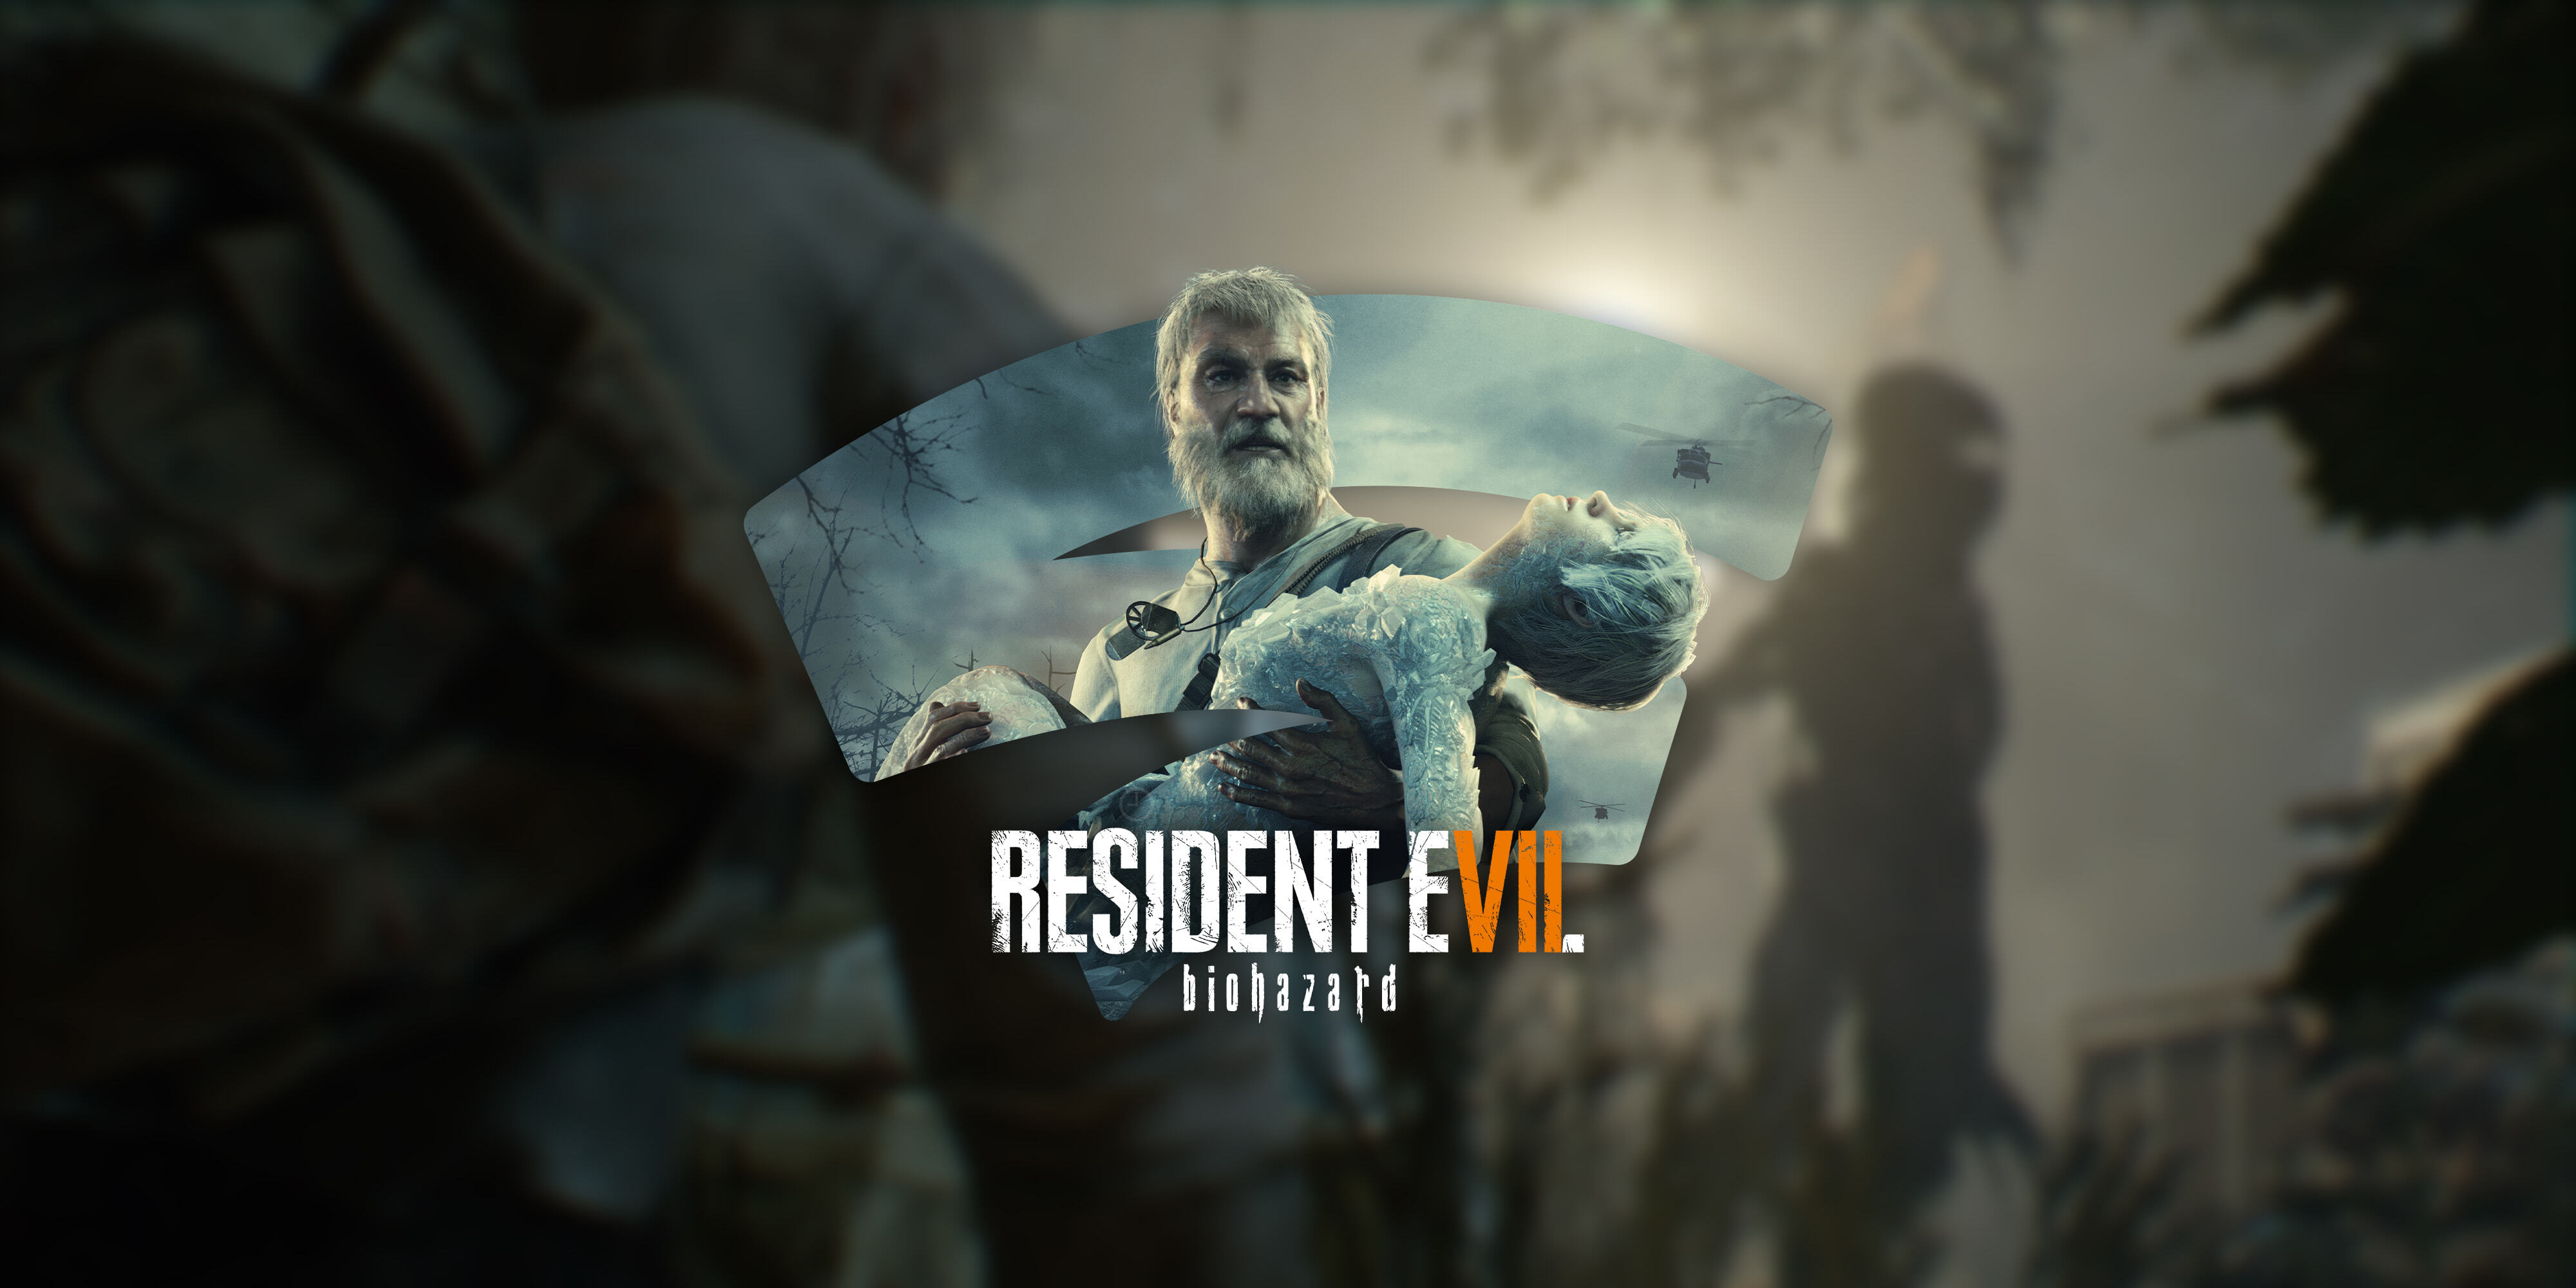 Resident Evil 7: Biohazard Review (PS4 / PSVR)